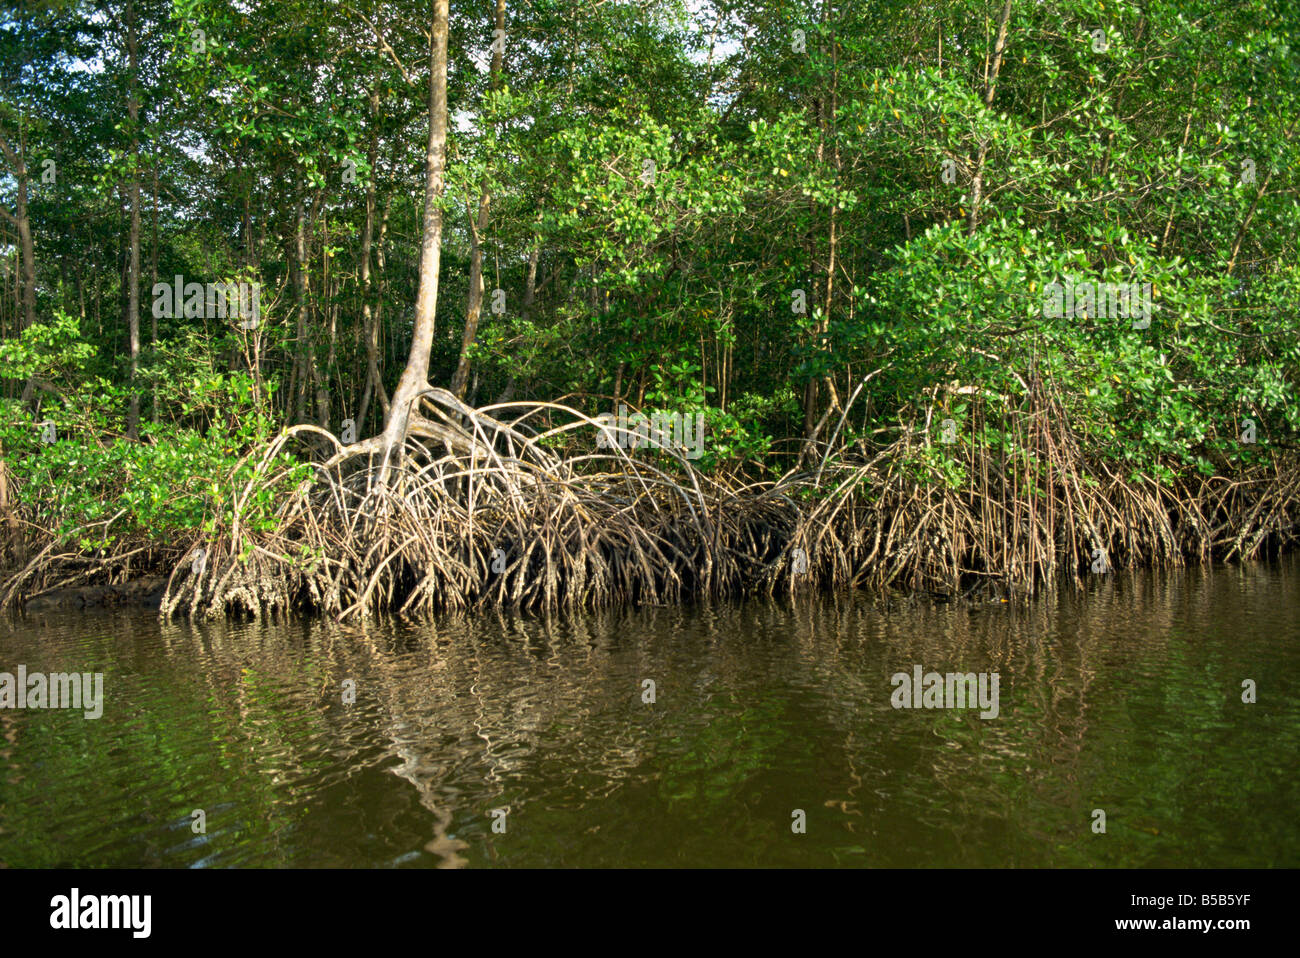 Caroni Mangrovensumpf und Nature Reserve Trinidad West Indies Karibik Mittelamerika Stockfoto